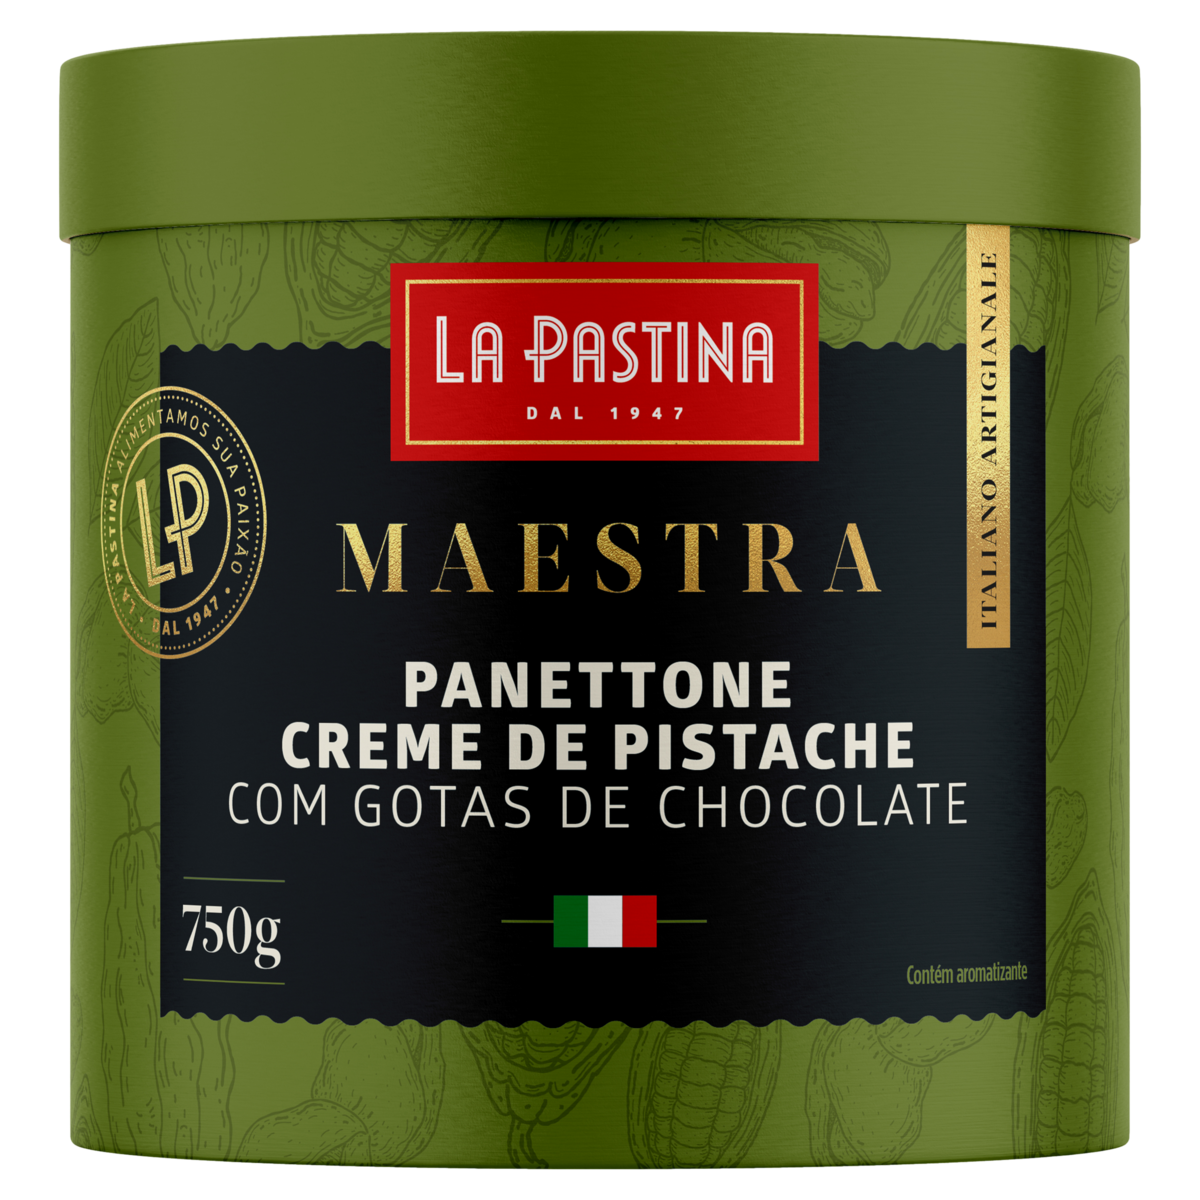 7896196071732 - PANETTONE COM GOTAS DE CHOCOLATE CREME DE PISTACHE LA PASTINA MAESTRA LATA 750G